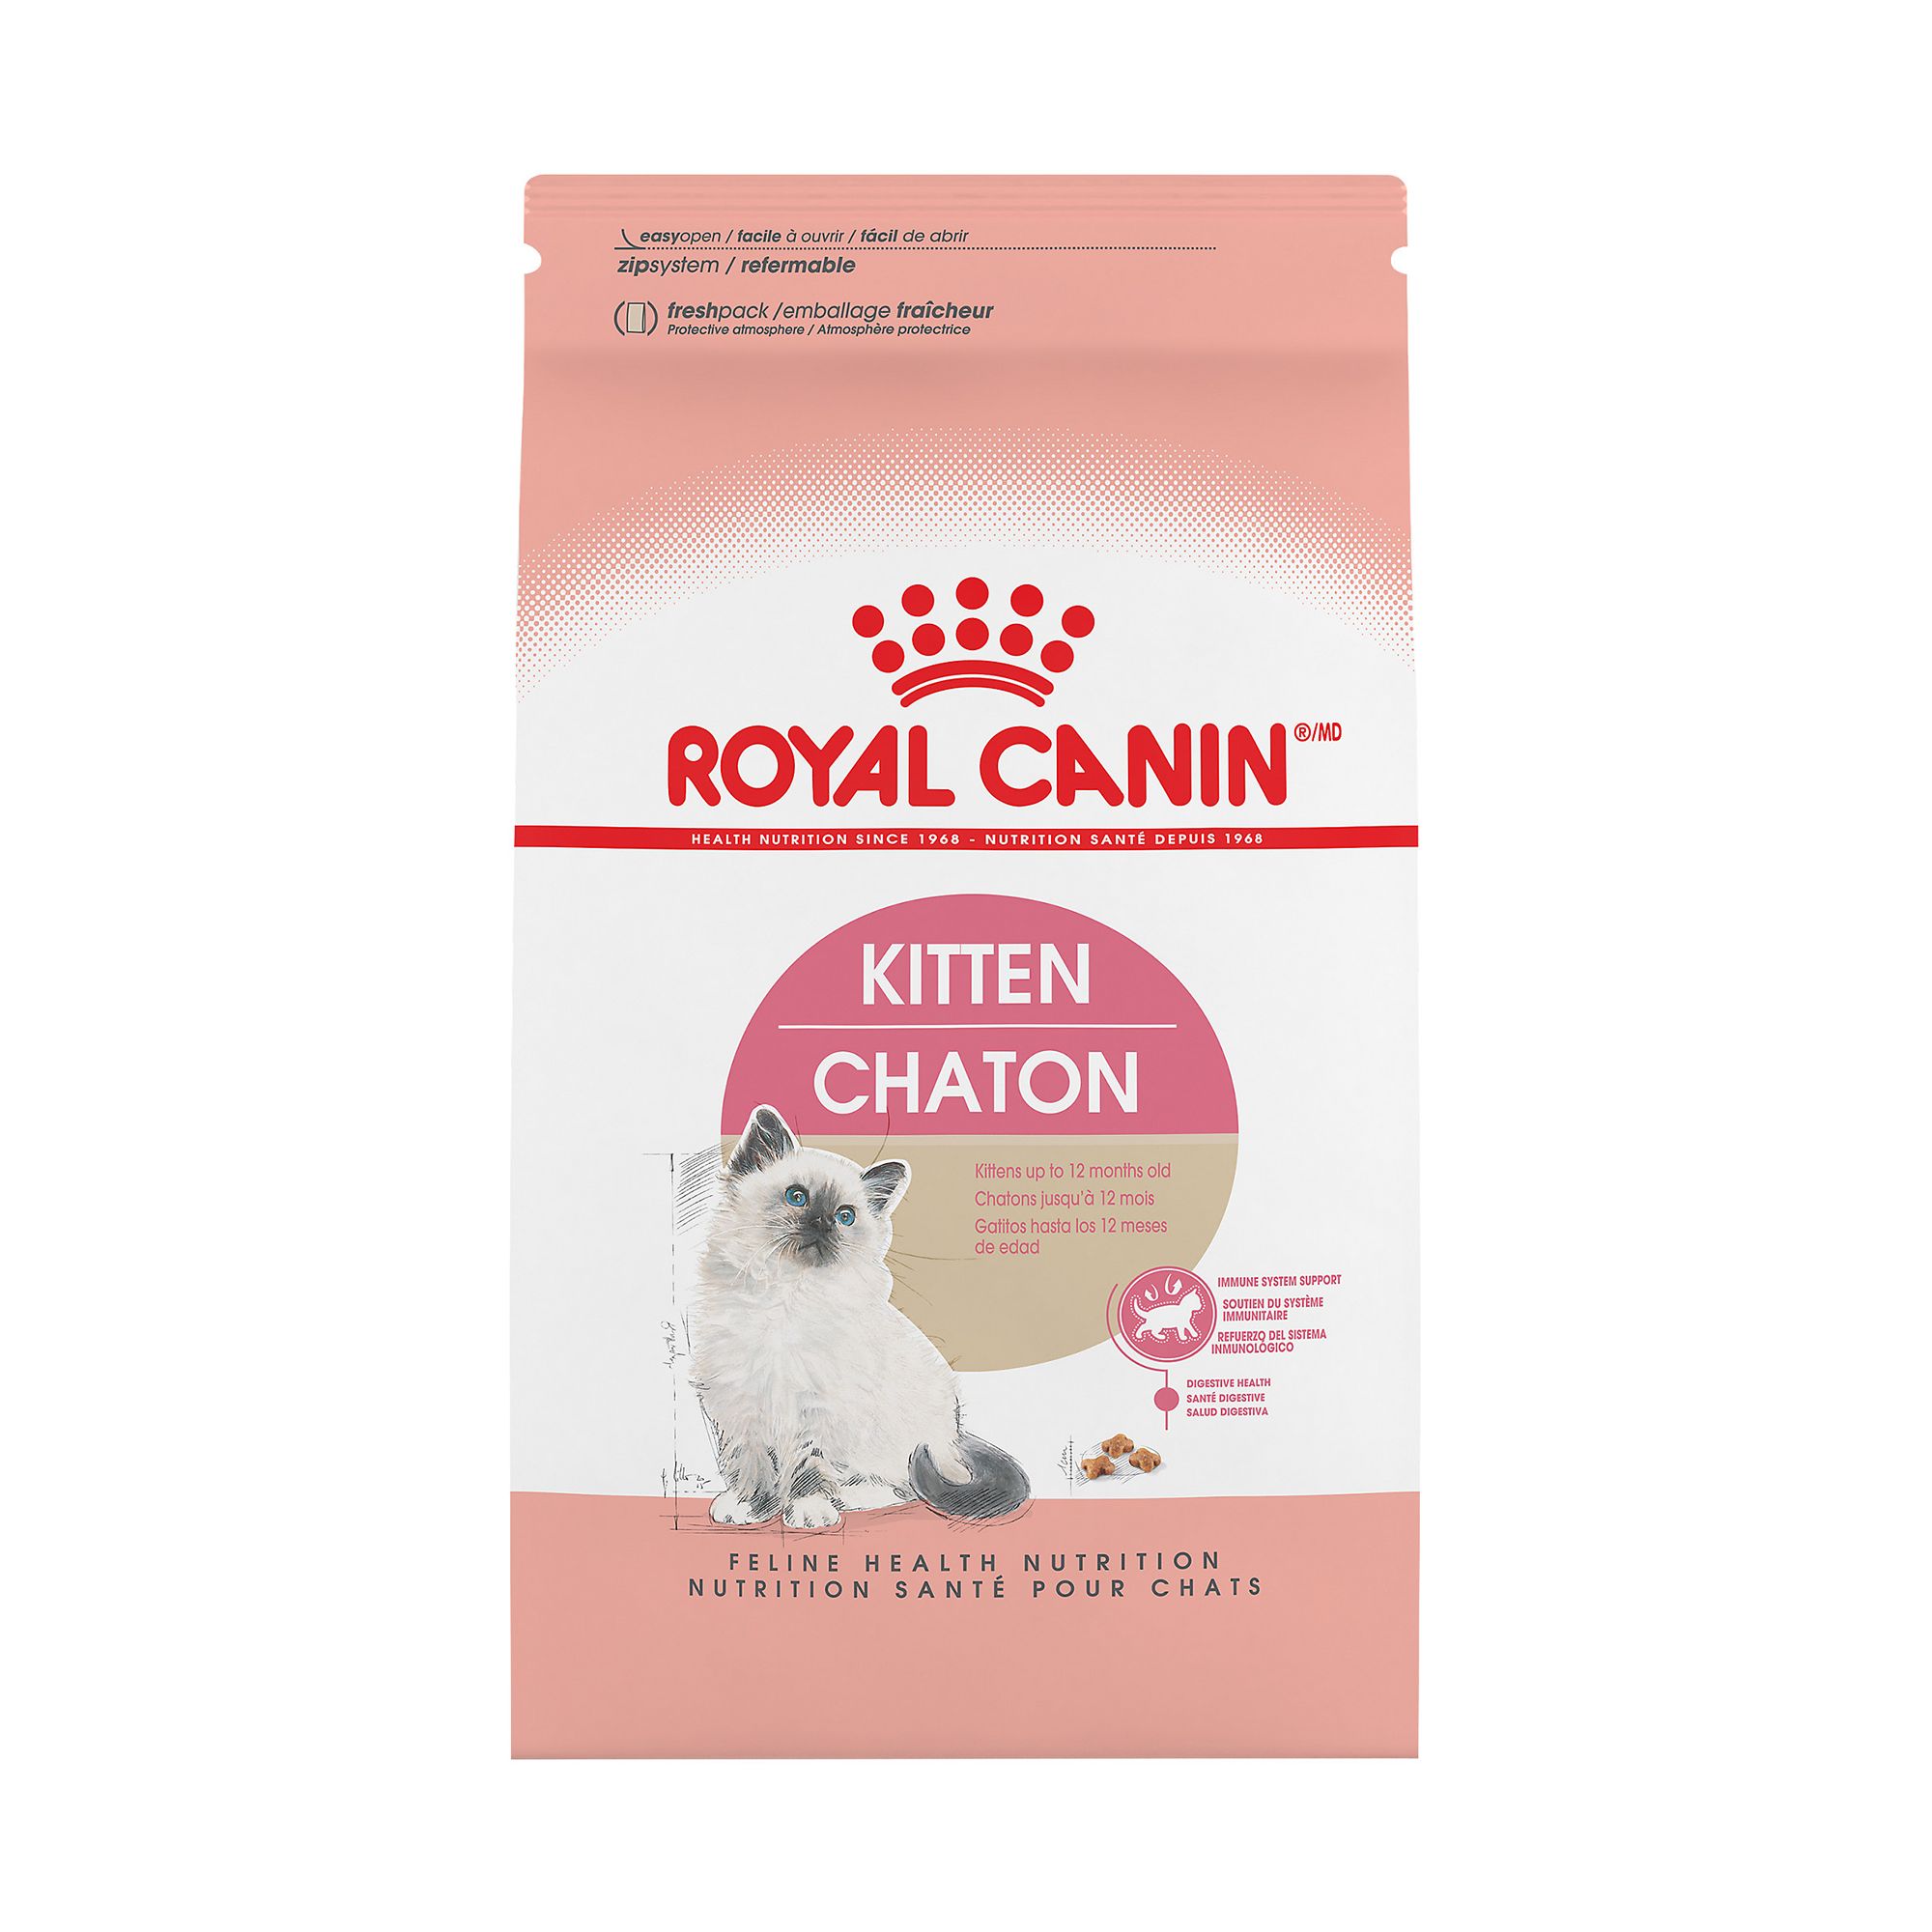 Royal Canin Urinary So Cat Food Canada Where To Buy